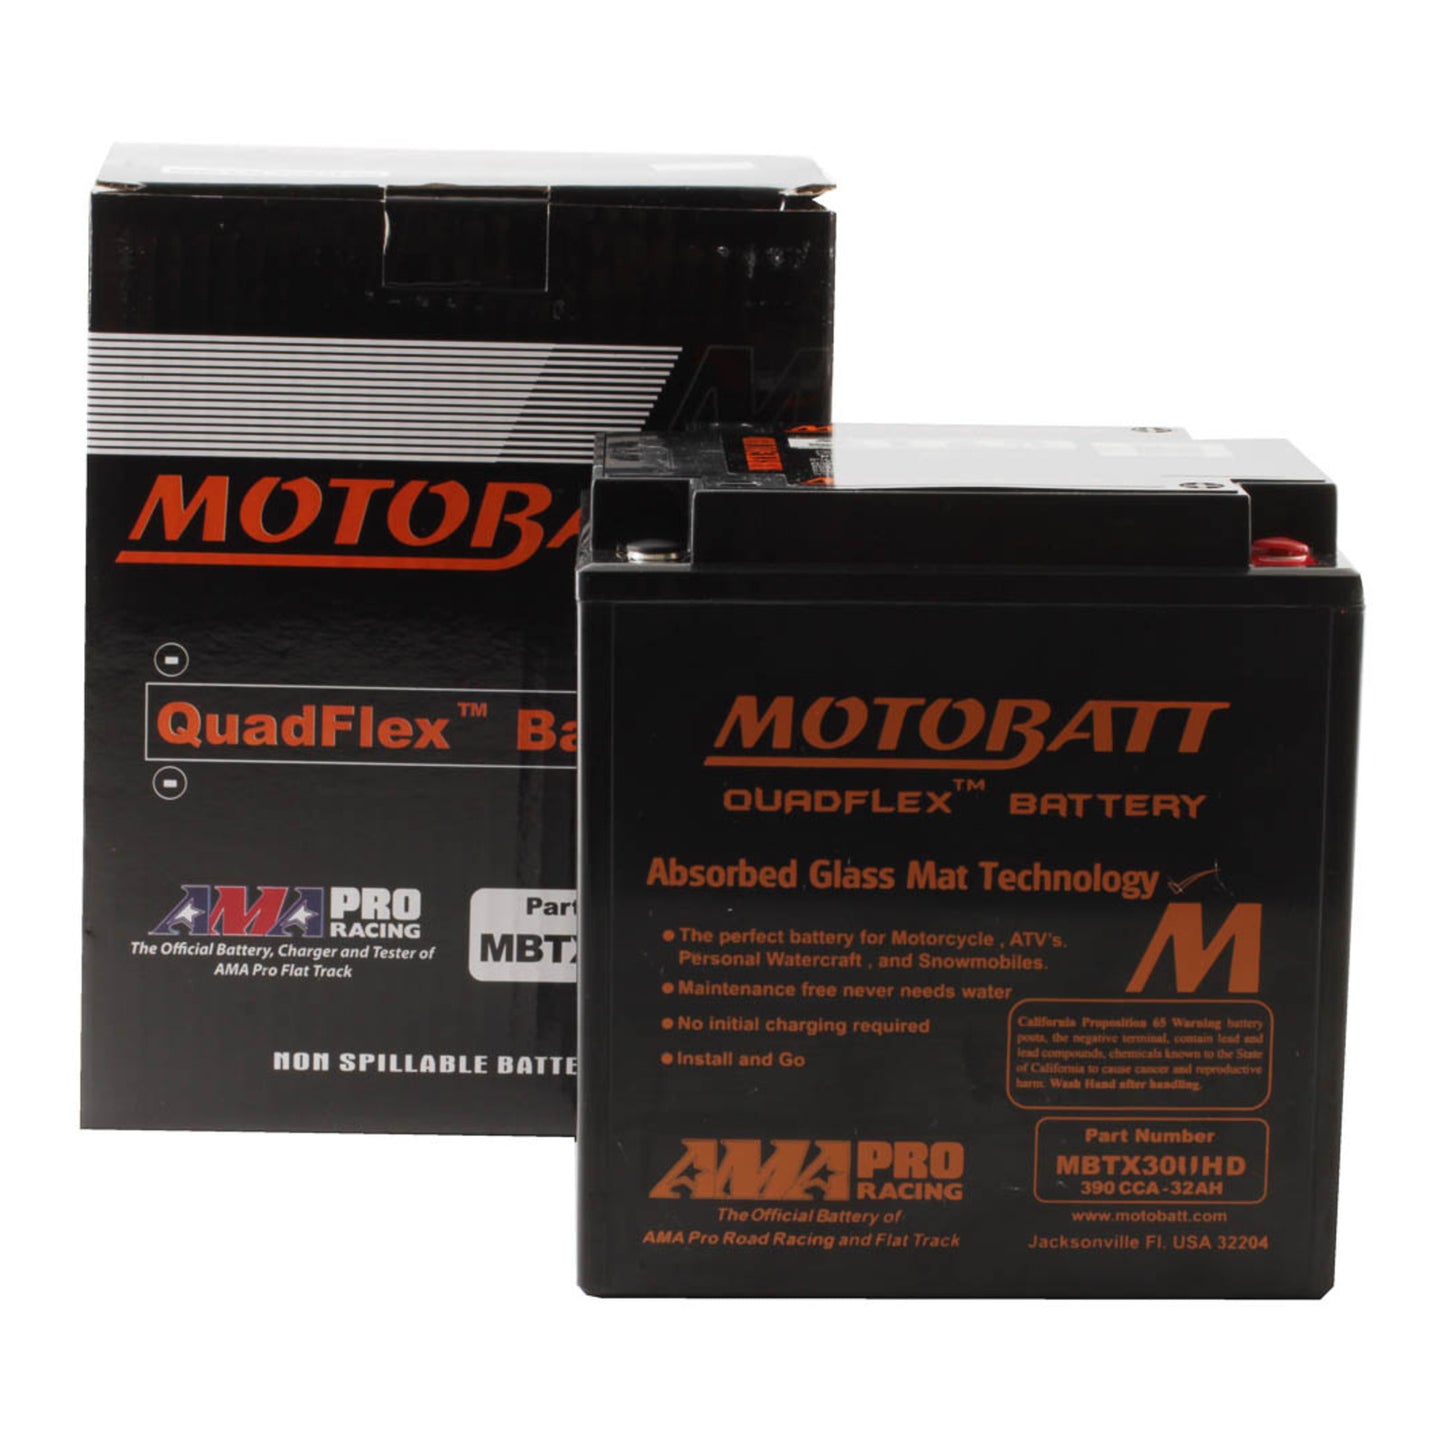 Motobatt Battery Quadflex AGM - MBTX30UHD